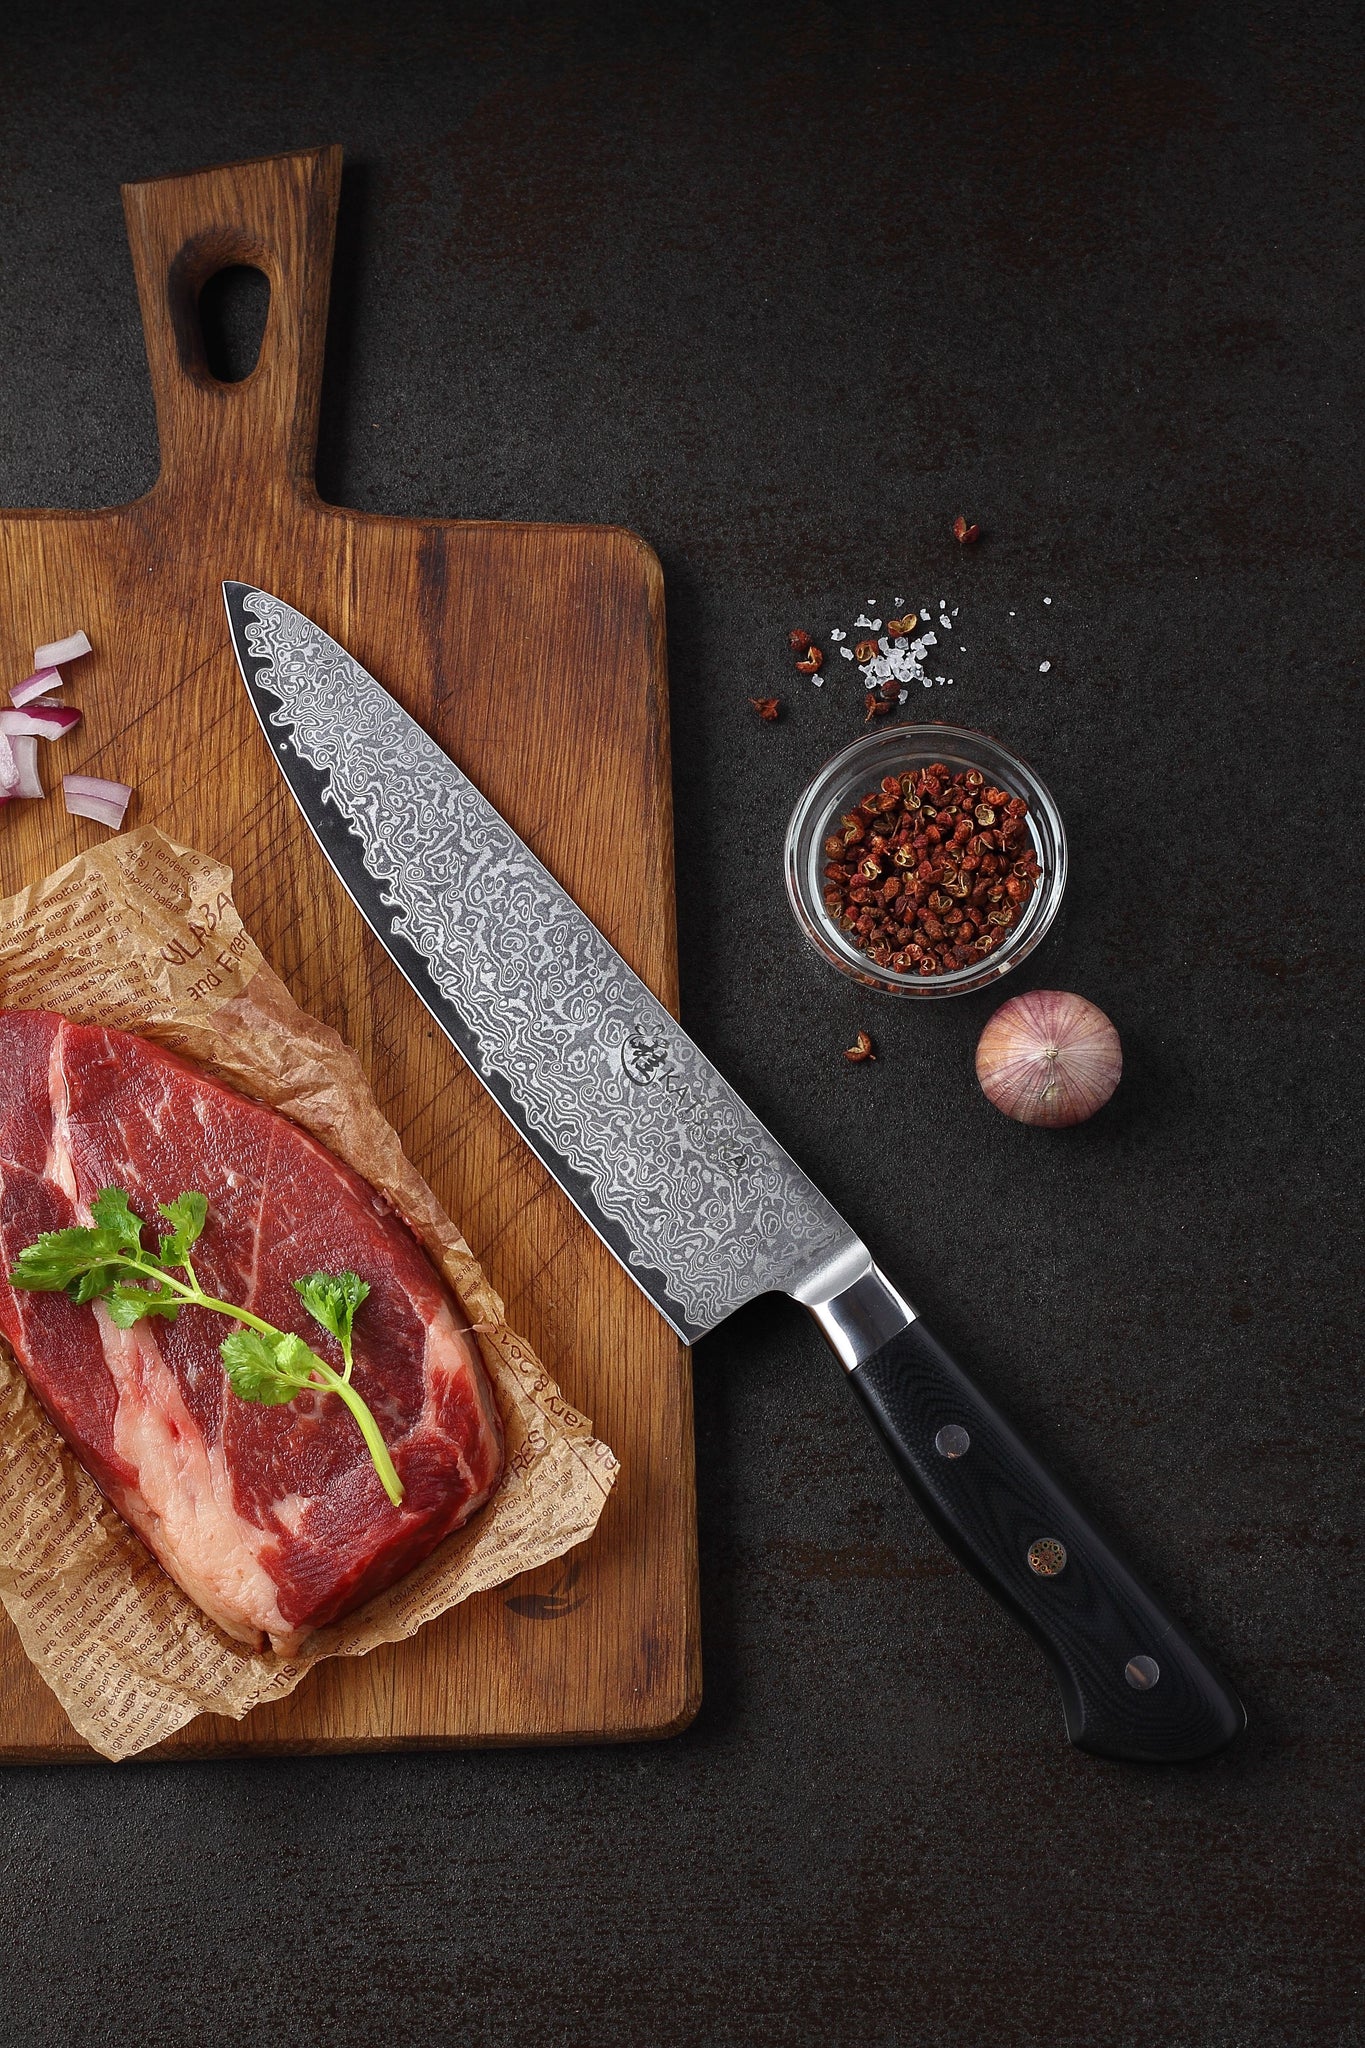 MITSUMOTO SAKARI 8 inch Japanese Chef Knife, High Carbon Stainless